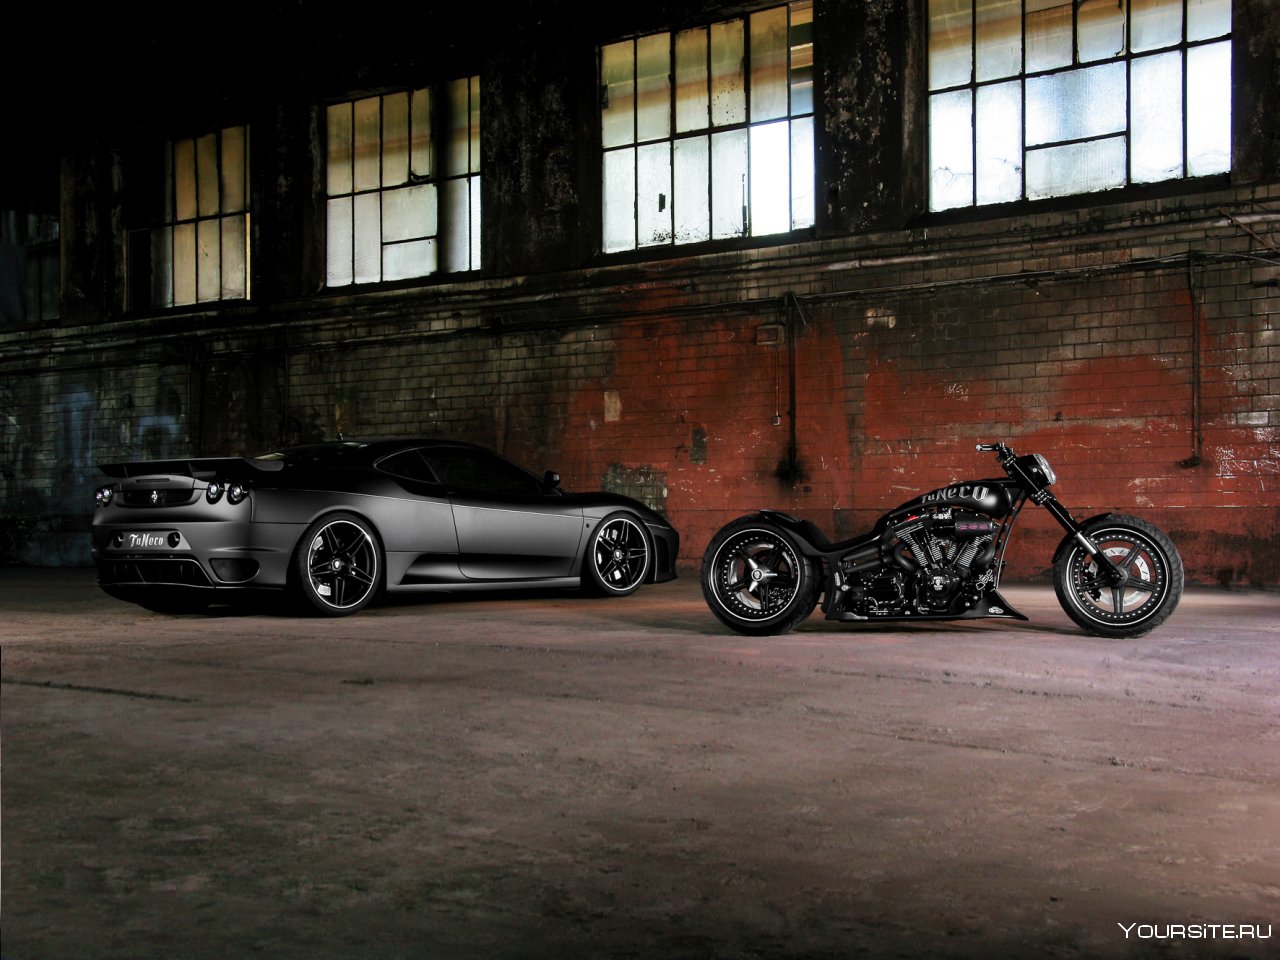 Moto auto. Ferrari f430 Tunero. Автомобиль и мотоцикл. Тачка для мотоцикла. Мотоцикл и машина чёрные.